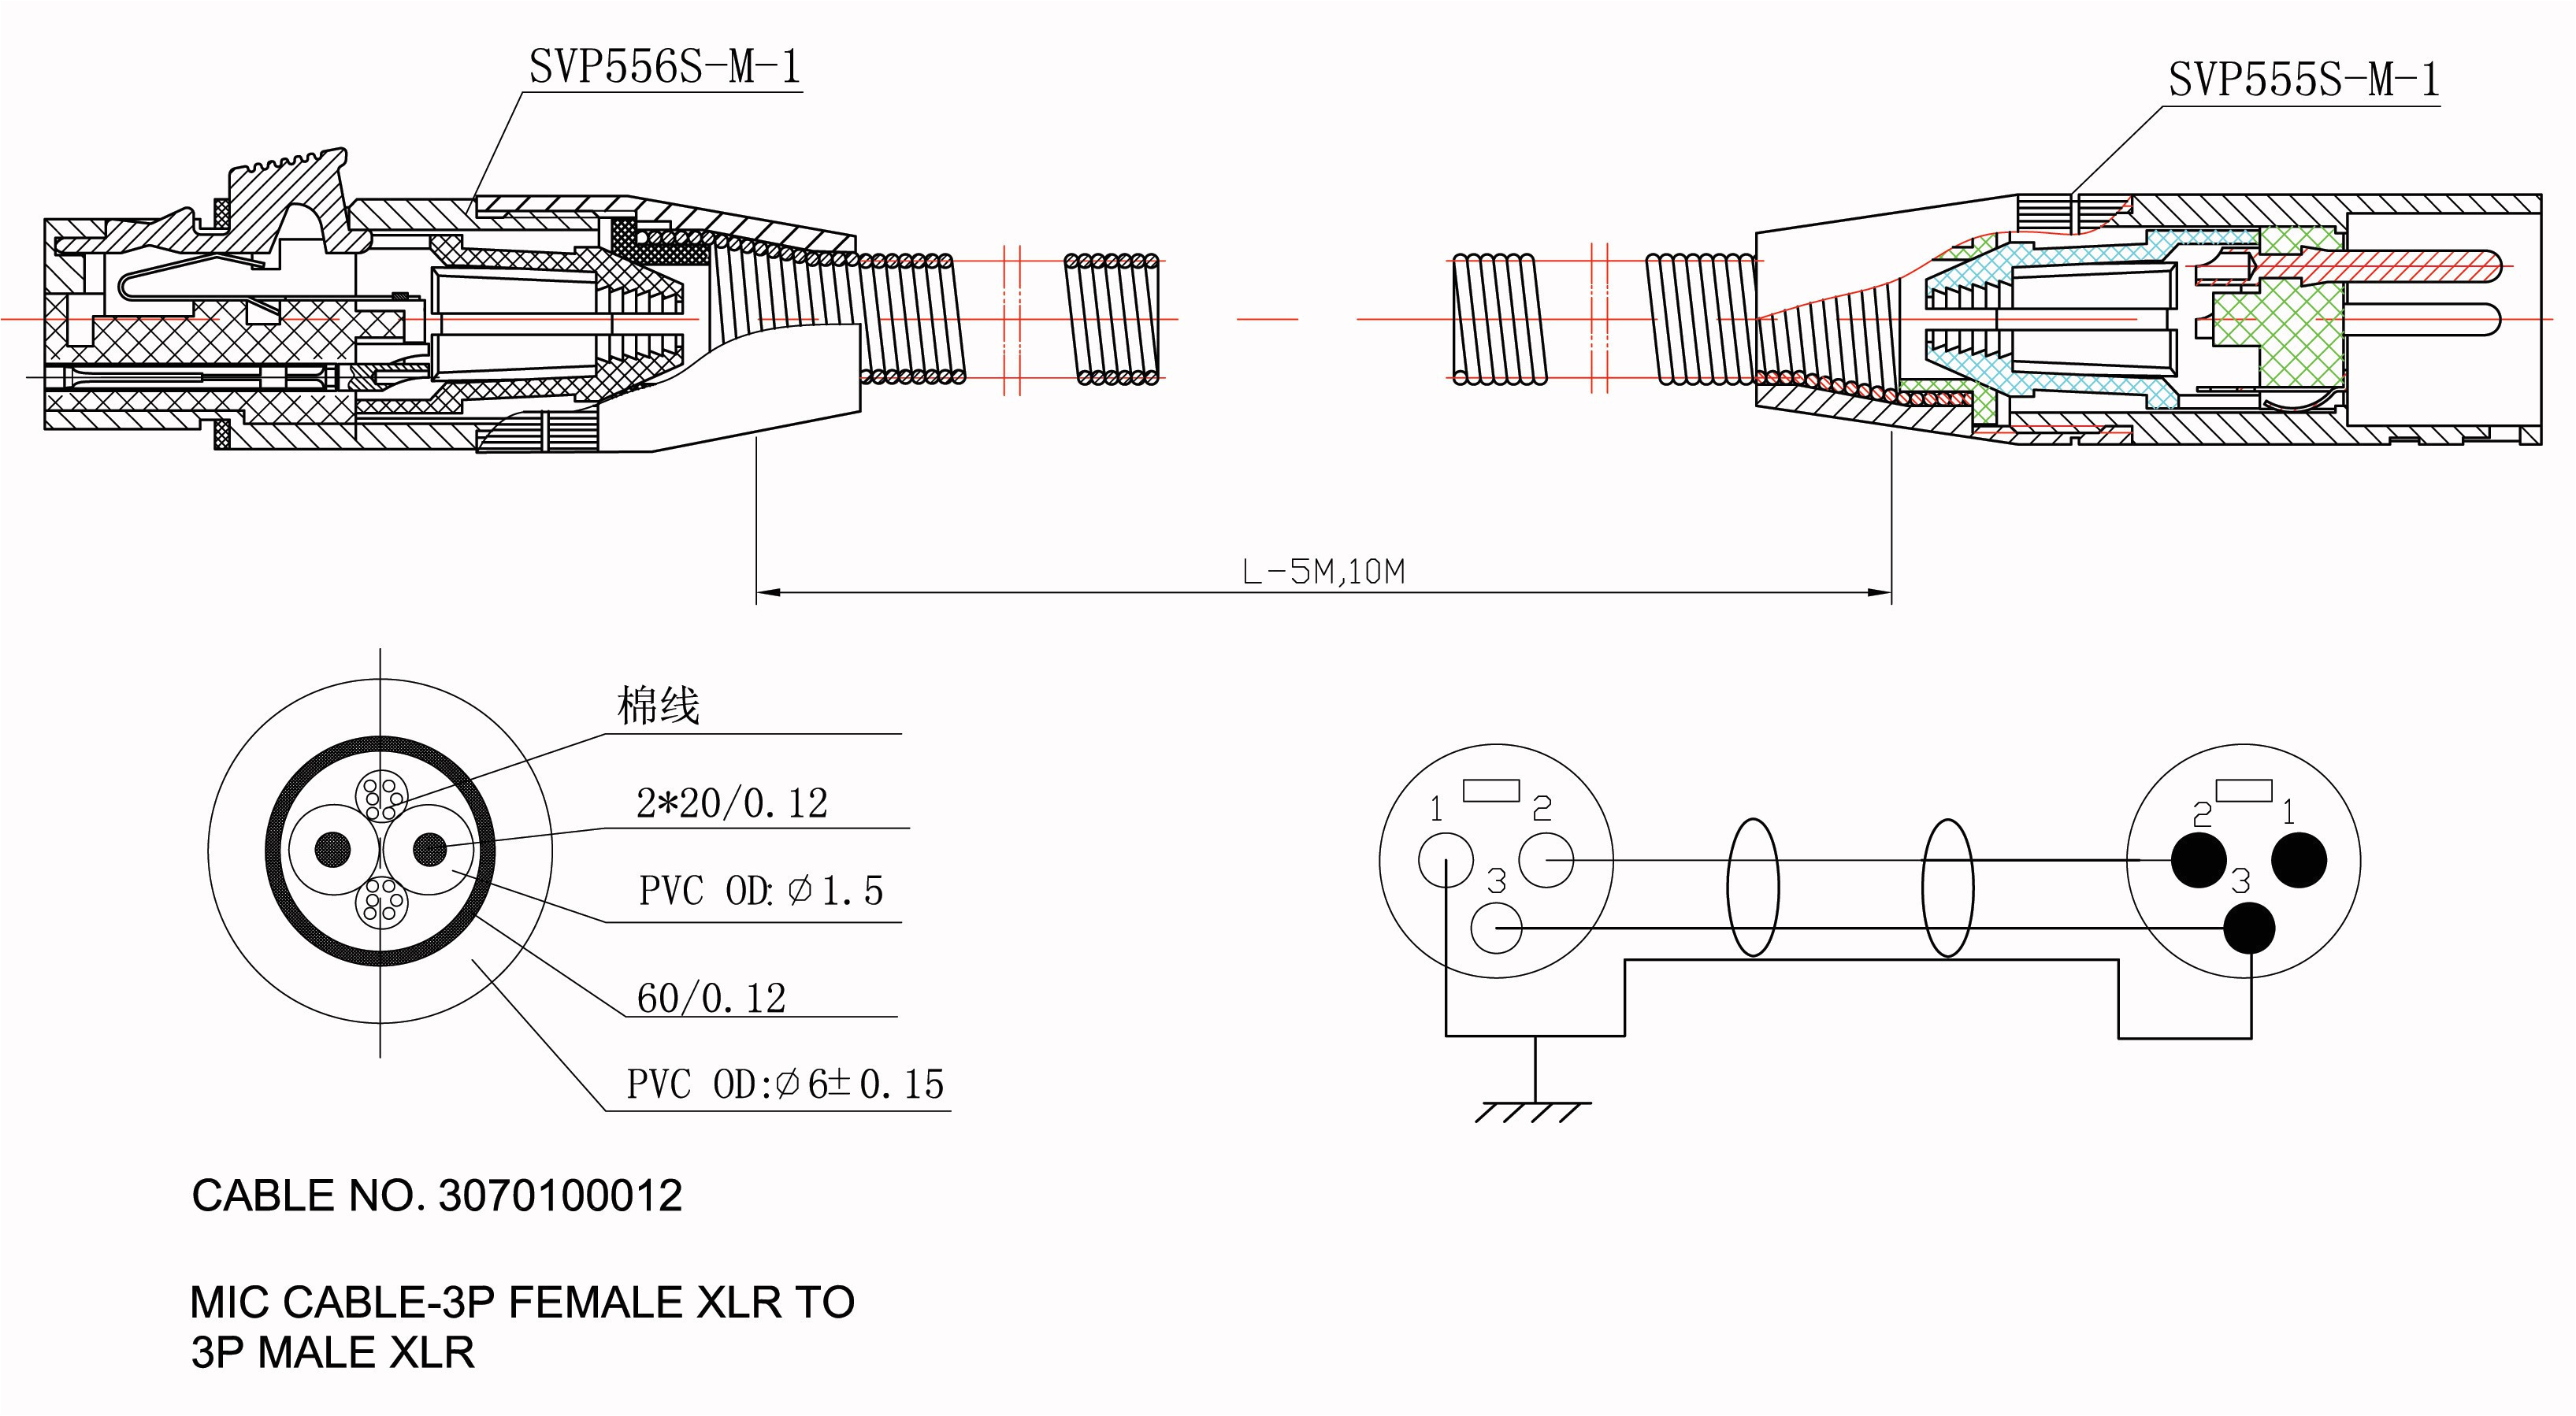 rj11 wiring diagram luxury rj45 to usb cable wiring diagrampictures gallery of rj11 wiring diagram luxury